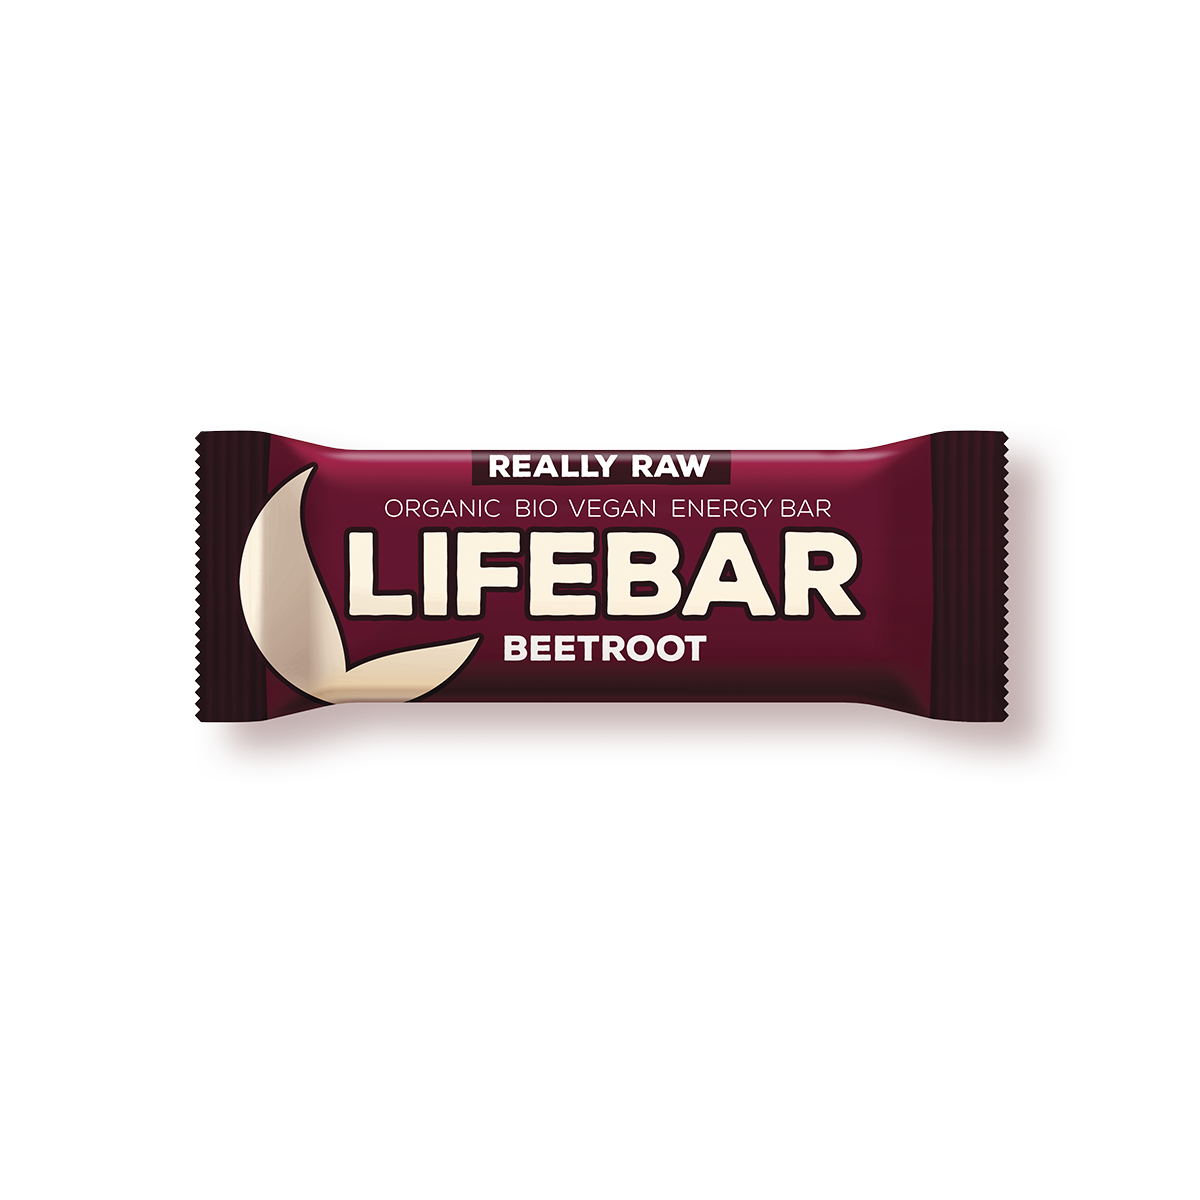 http://contao.lifefood.eu/tl_files/data/en/NEW products/lifebars/lifebars/beetroot/raw-energy-bar-beetroot-lifebar.png